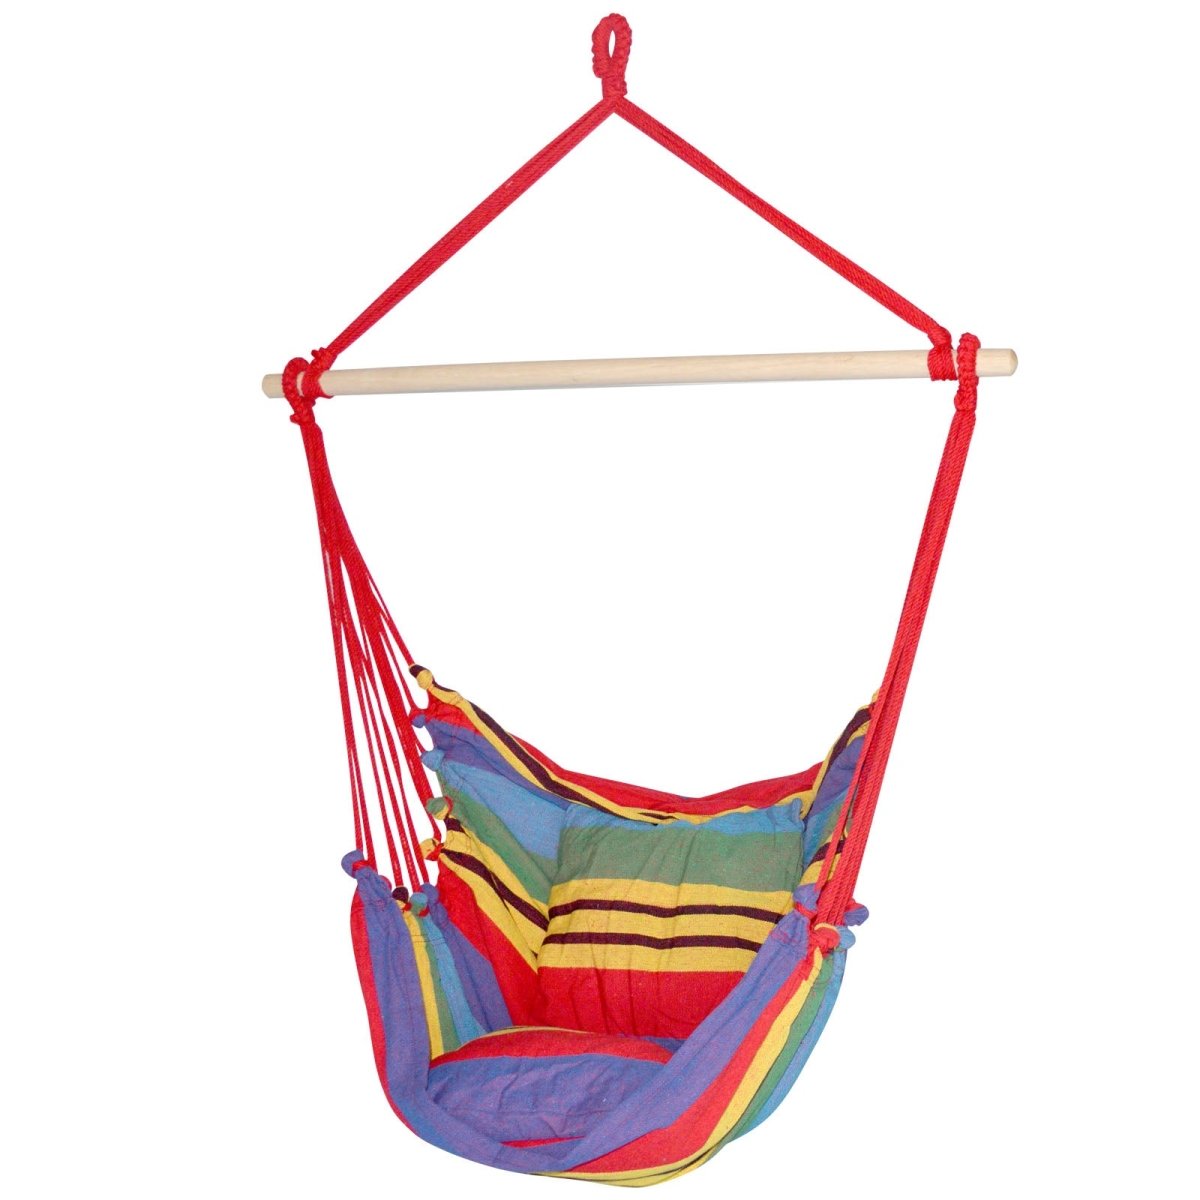 Gardeon Hammock Chair Outdoor Camping Hanging Hammocks Cushion Pillow Rainbow - Outdoorium